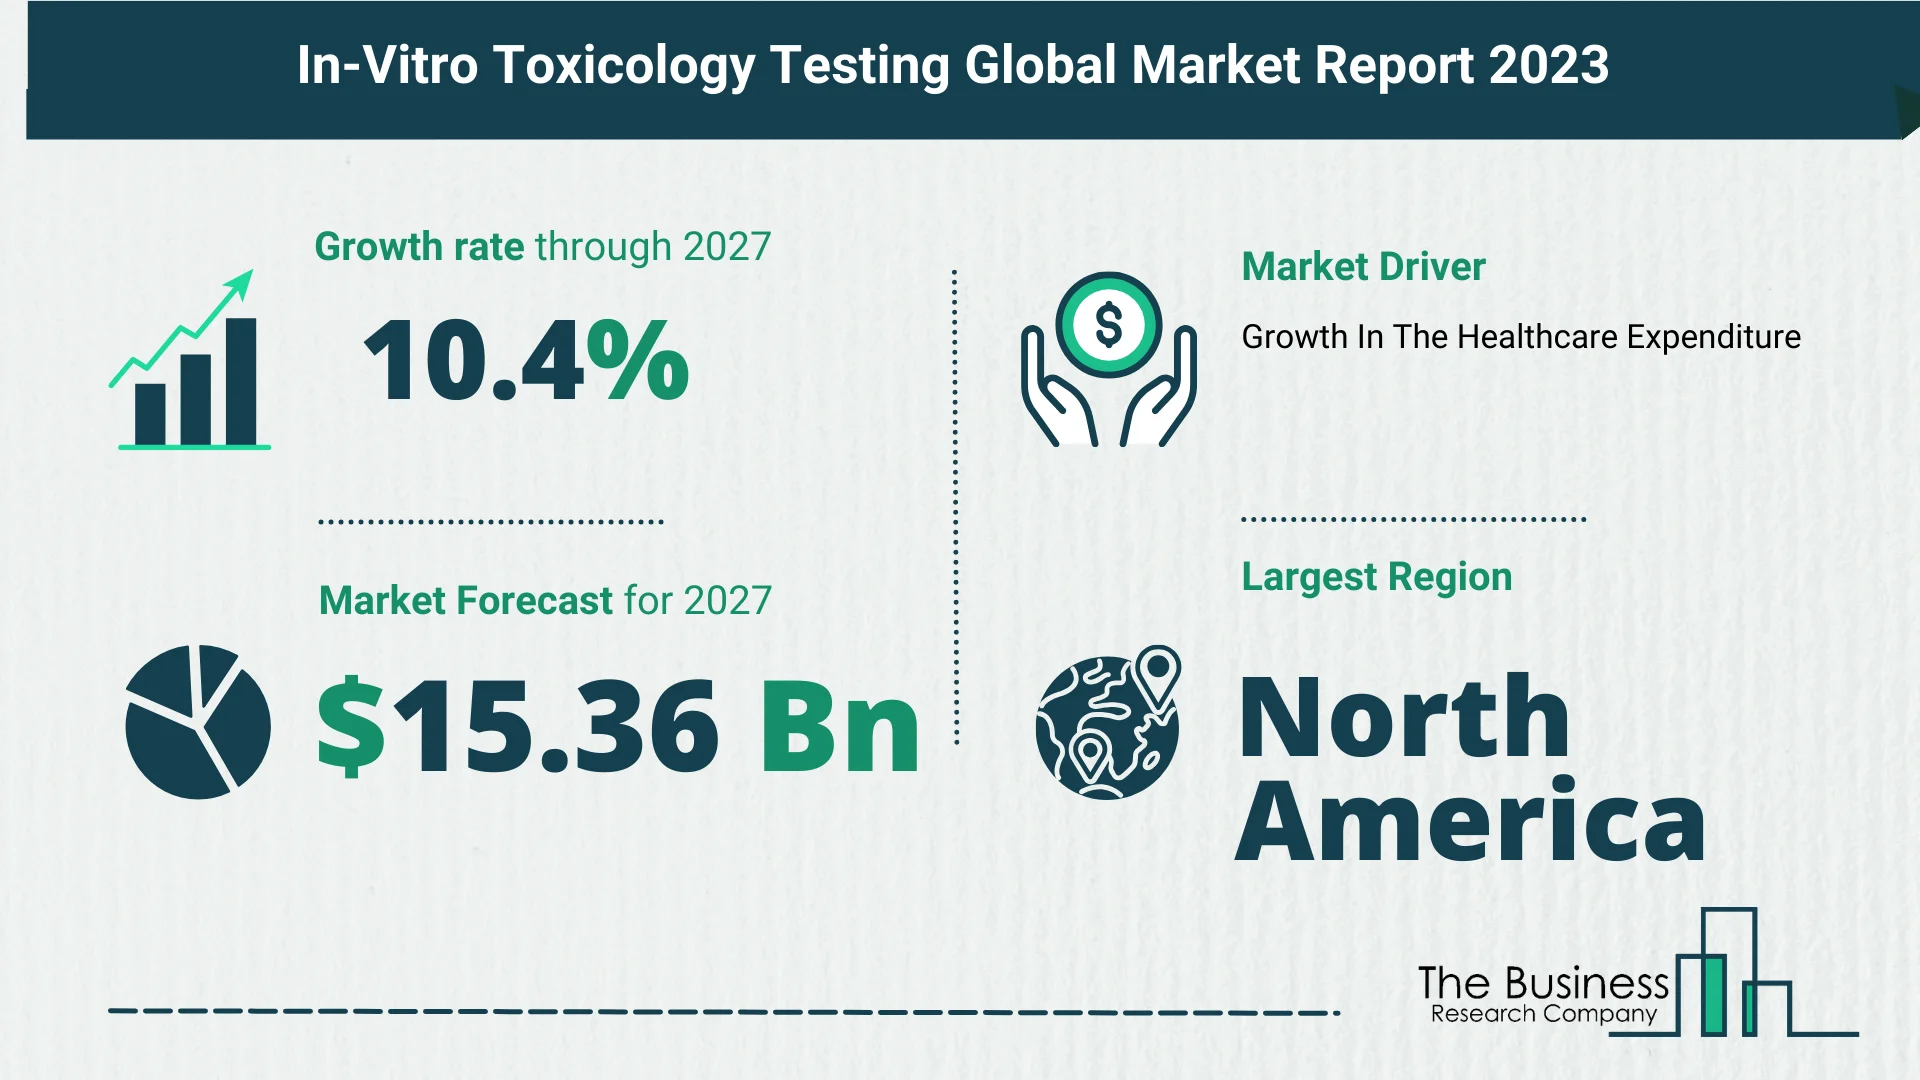 Global In-Vitro Toxicology Testing Market Size